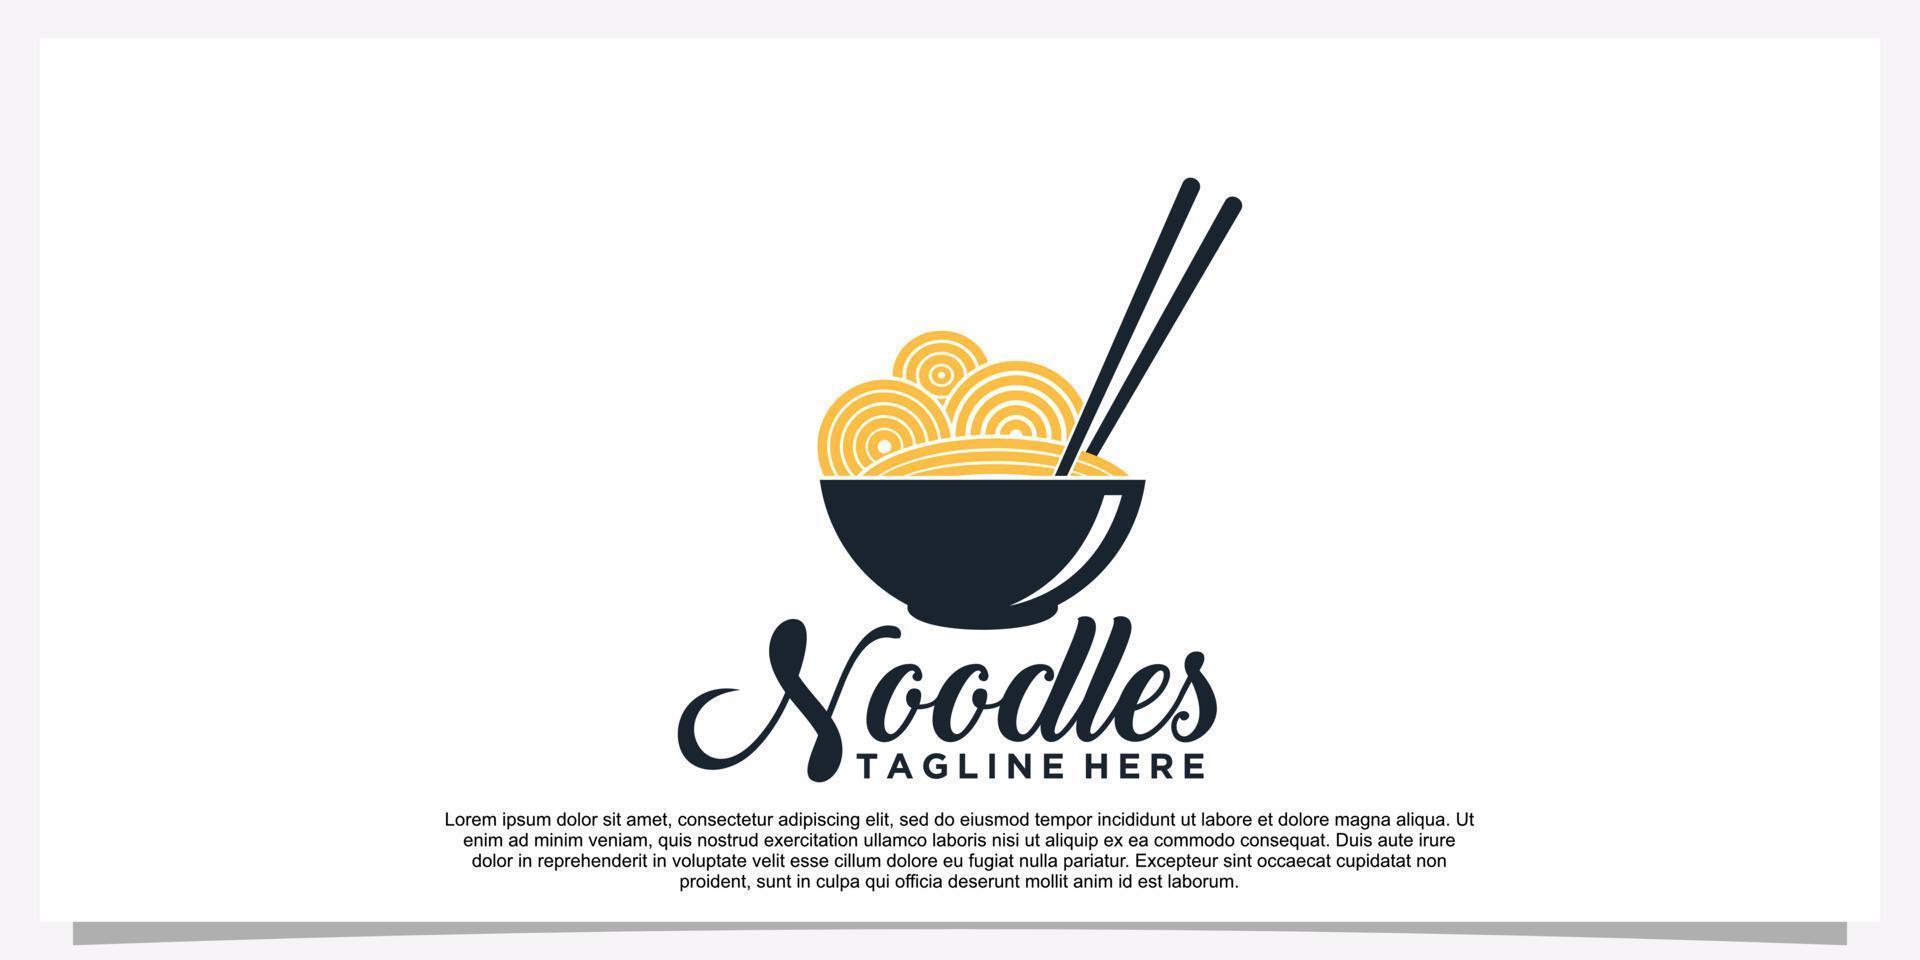 Ramen noodle logo design illustration for restaurant icon with creative element Premium Vector Part 23